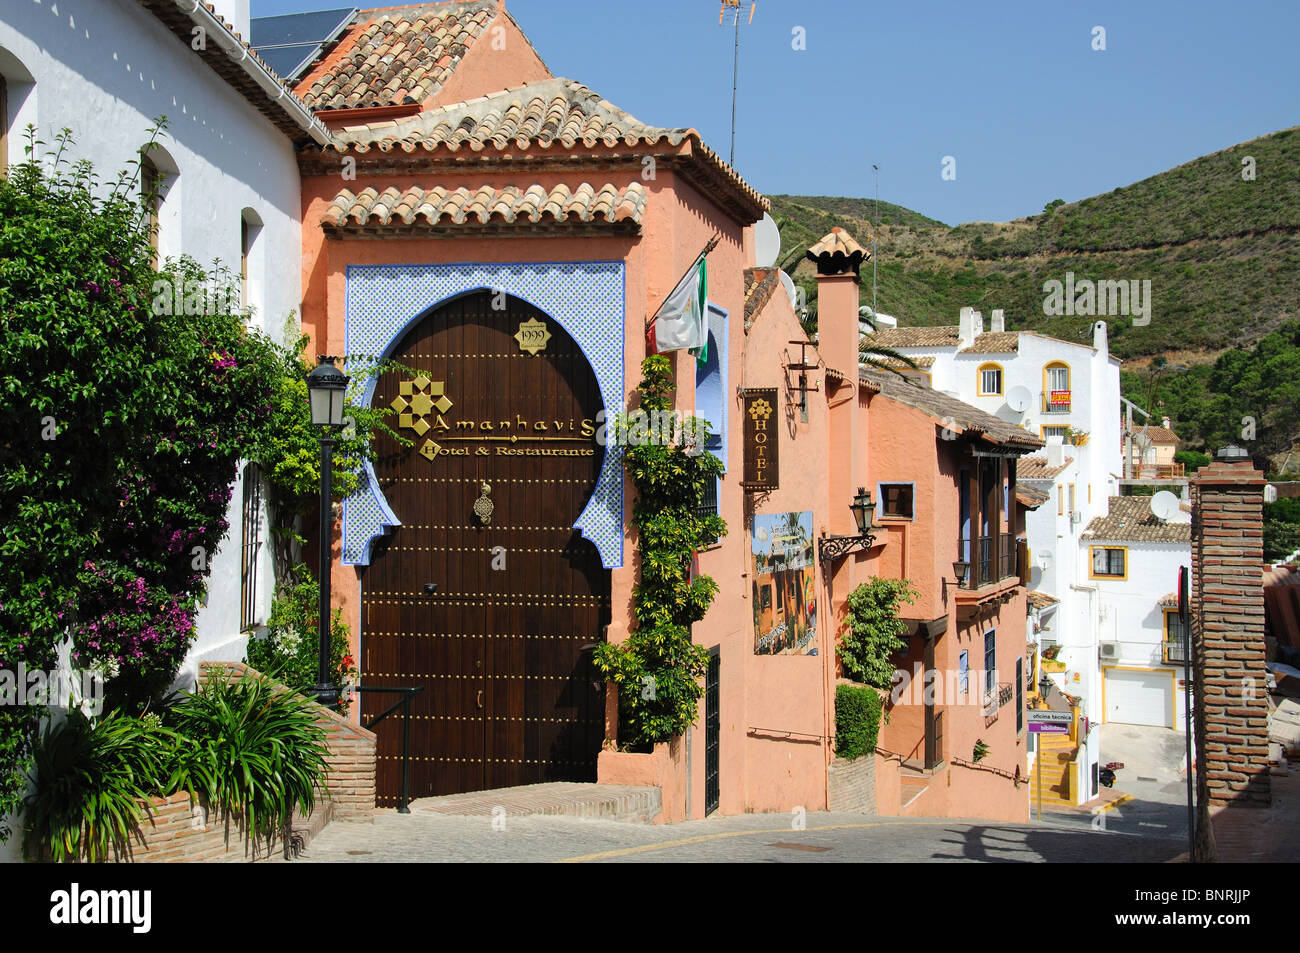 Hotel and restaurant Benahavis, Benahavis, Costa del Sol, Malaga Province, Andalucia, Spain, Western Europe. Stock Photo